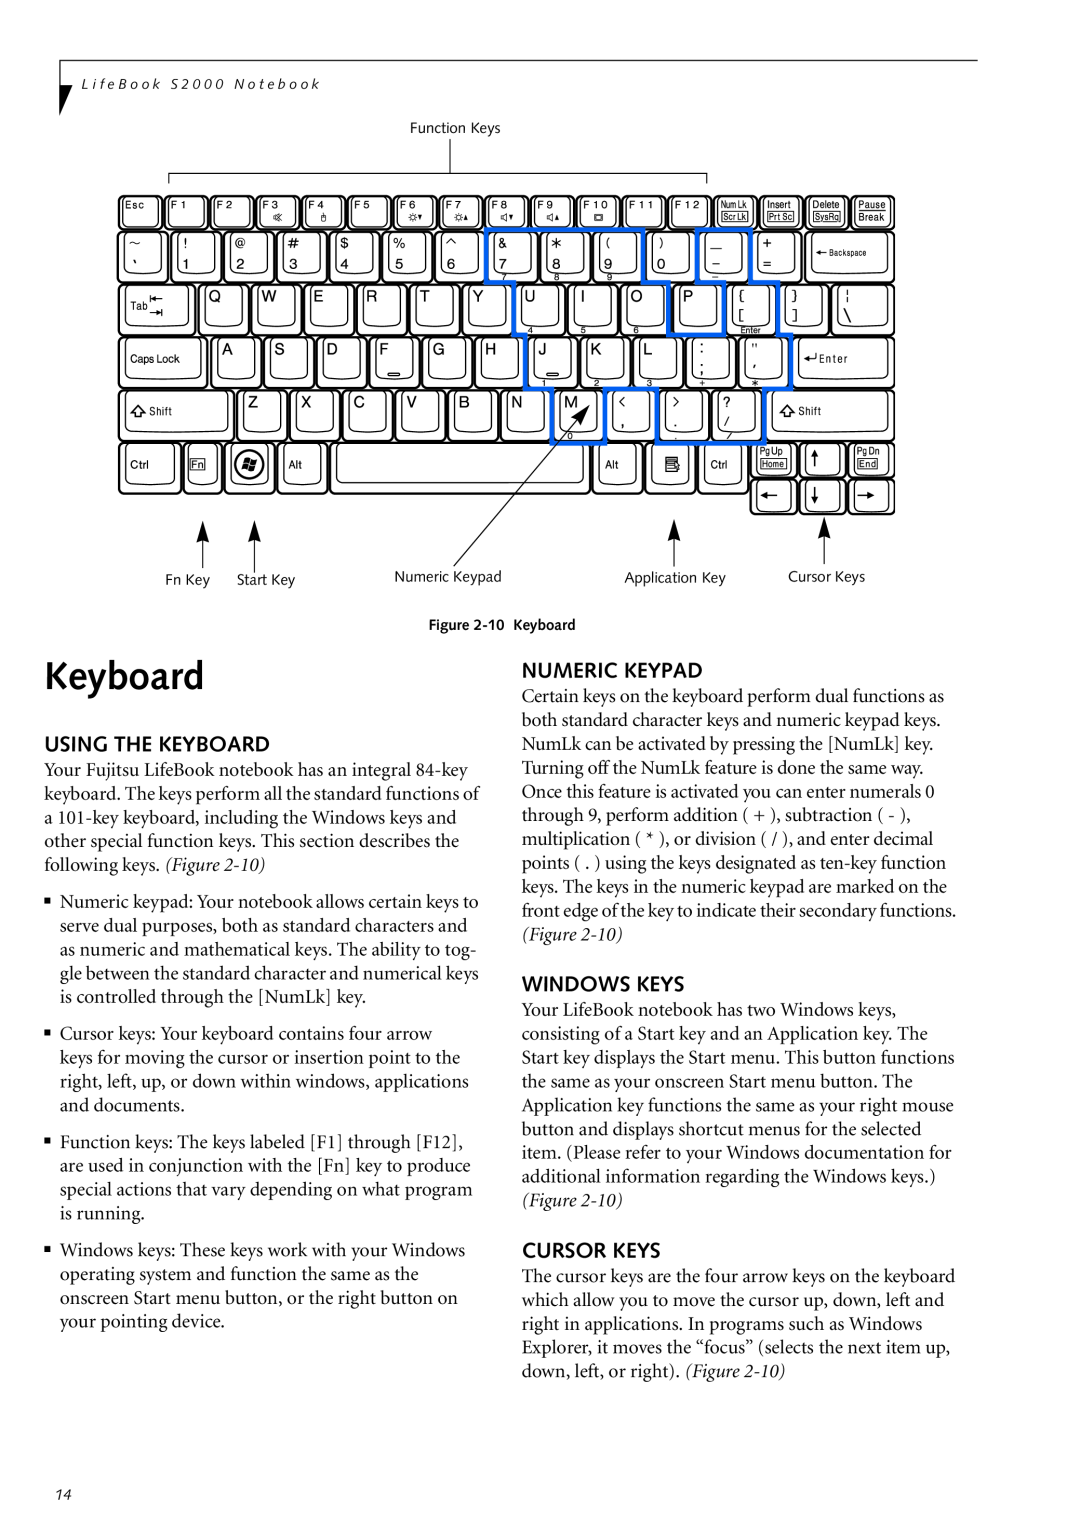 Fujitsu Siemens Computers S2210 manual Using The Keyboard, Numeric Keypad, Windows Keys, Cursor Keys 